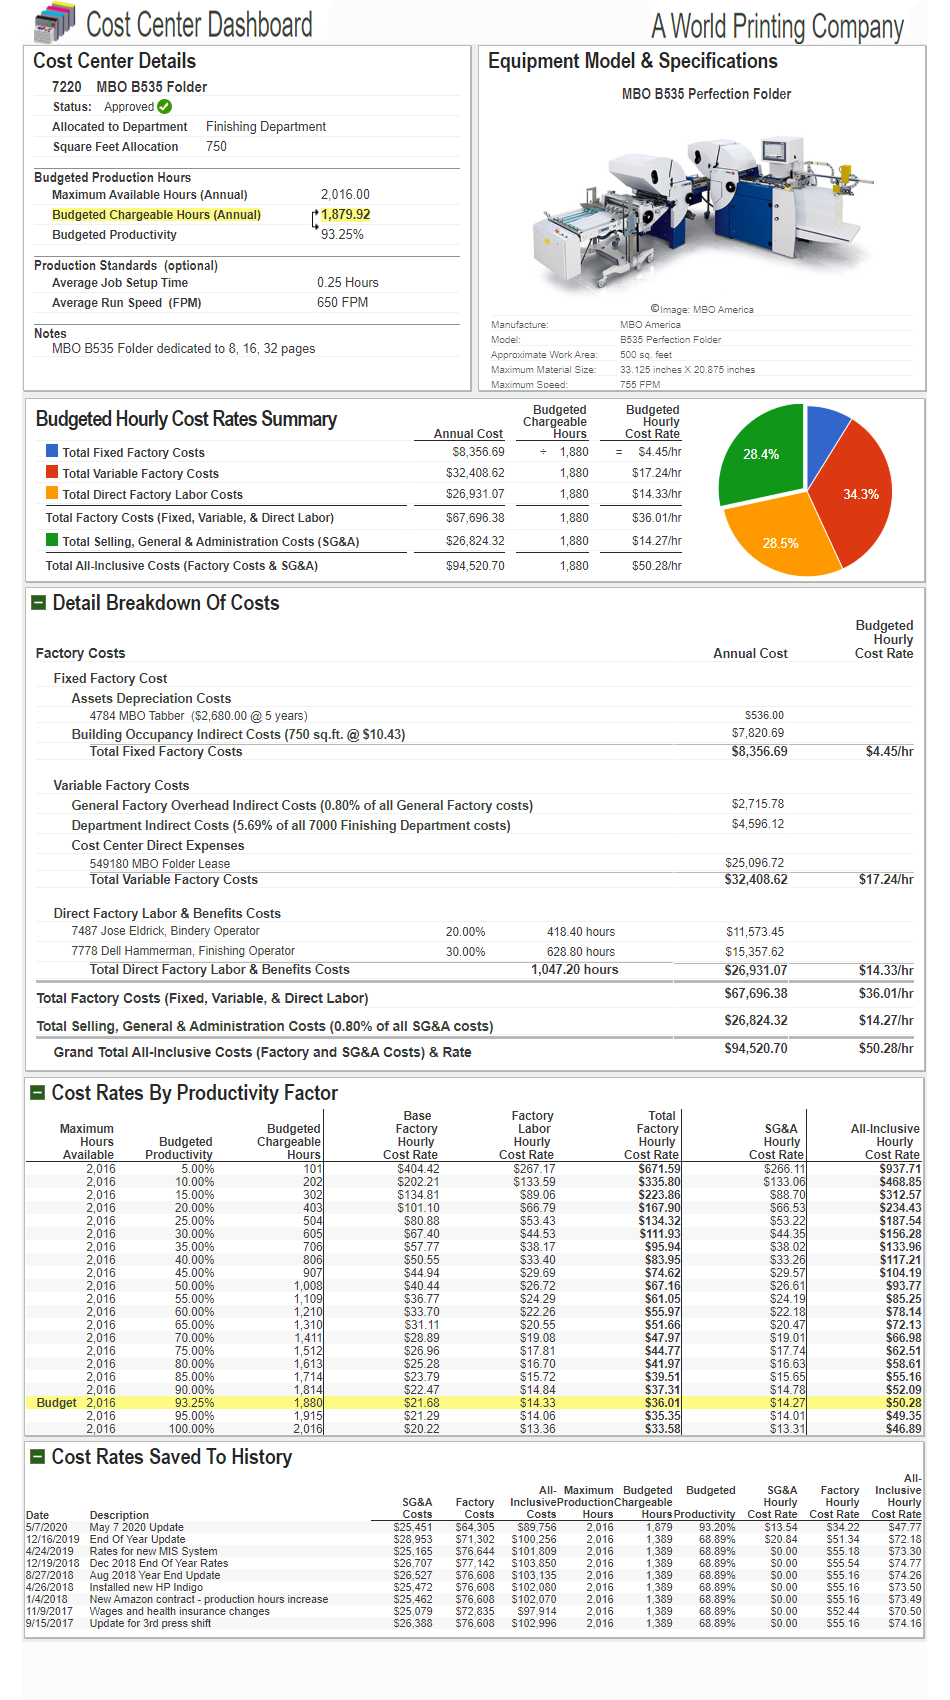 MBO Folder budgeted hourly rates